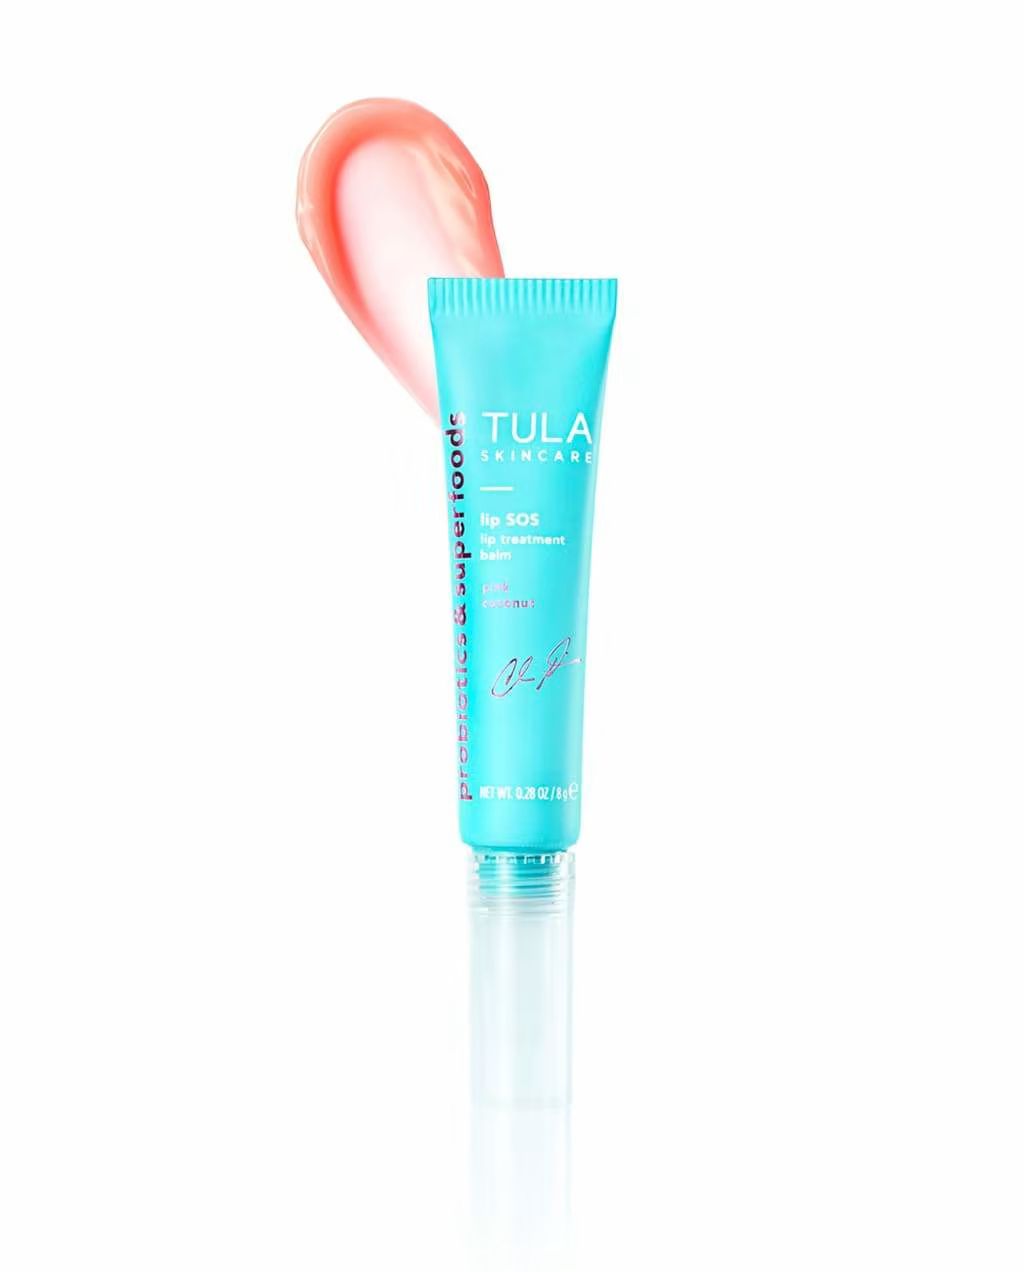 lip treatment balm in pink coconut | Tula Skincare